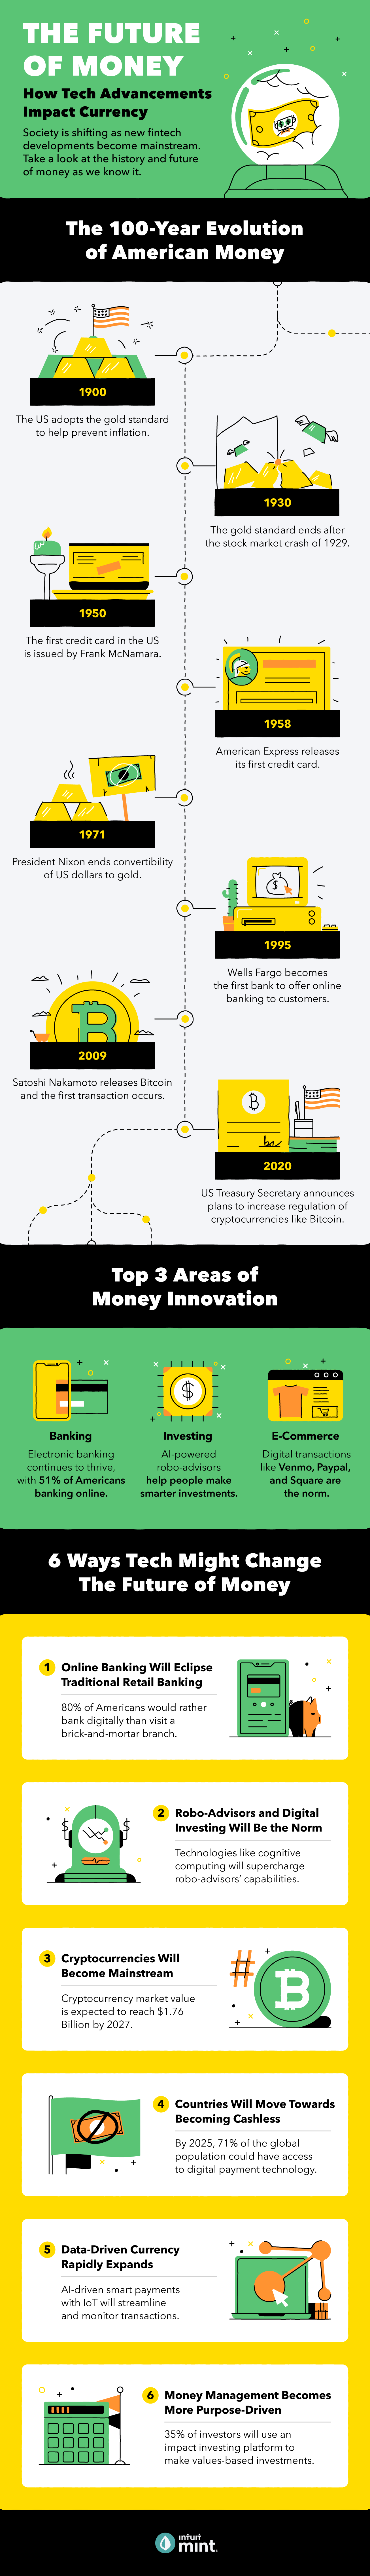 The future of money predictions